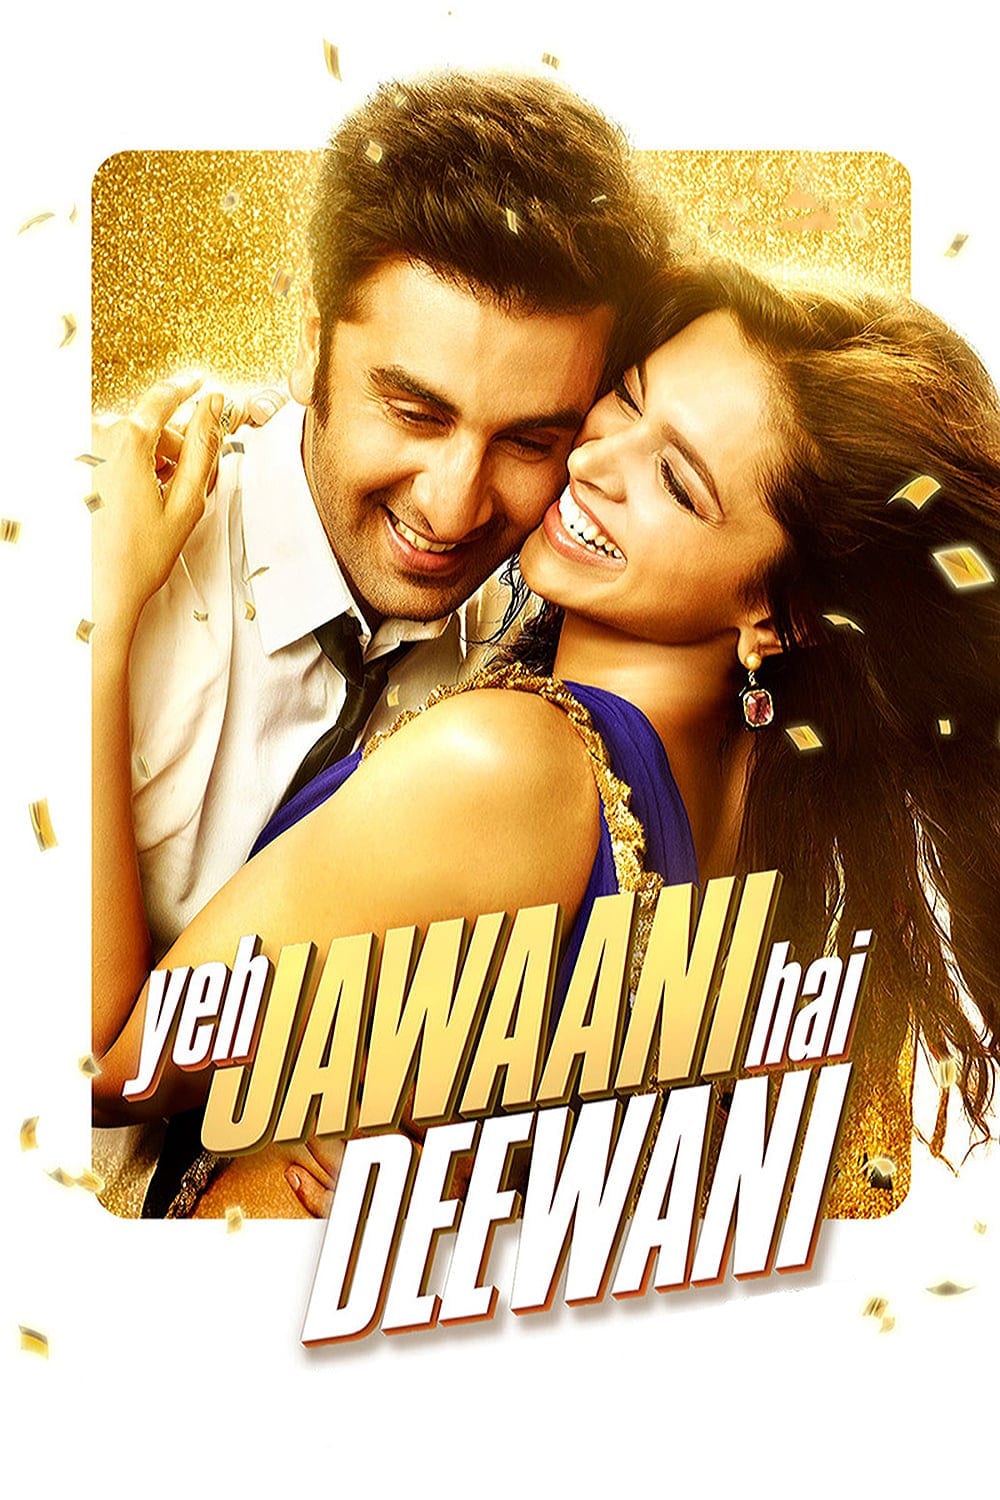 Poster for the movie "Yeh Jawaani Hai Deewani"